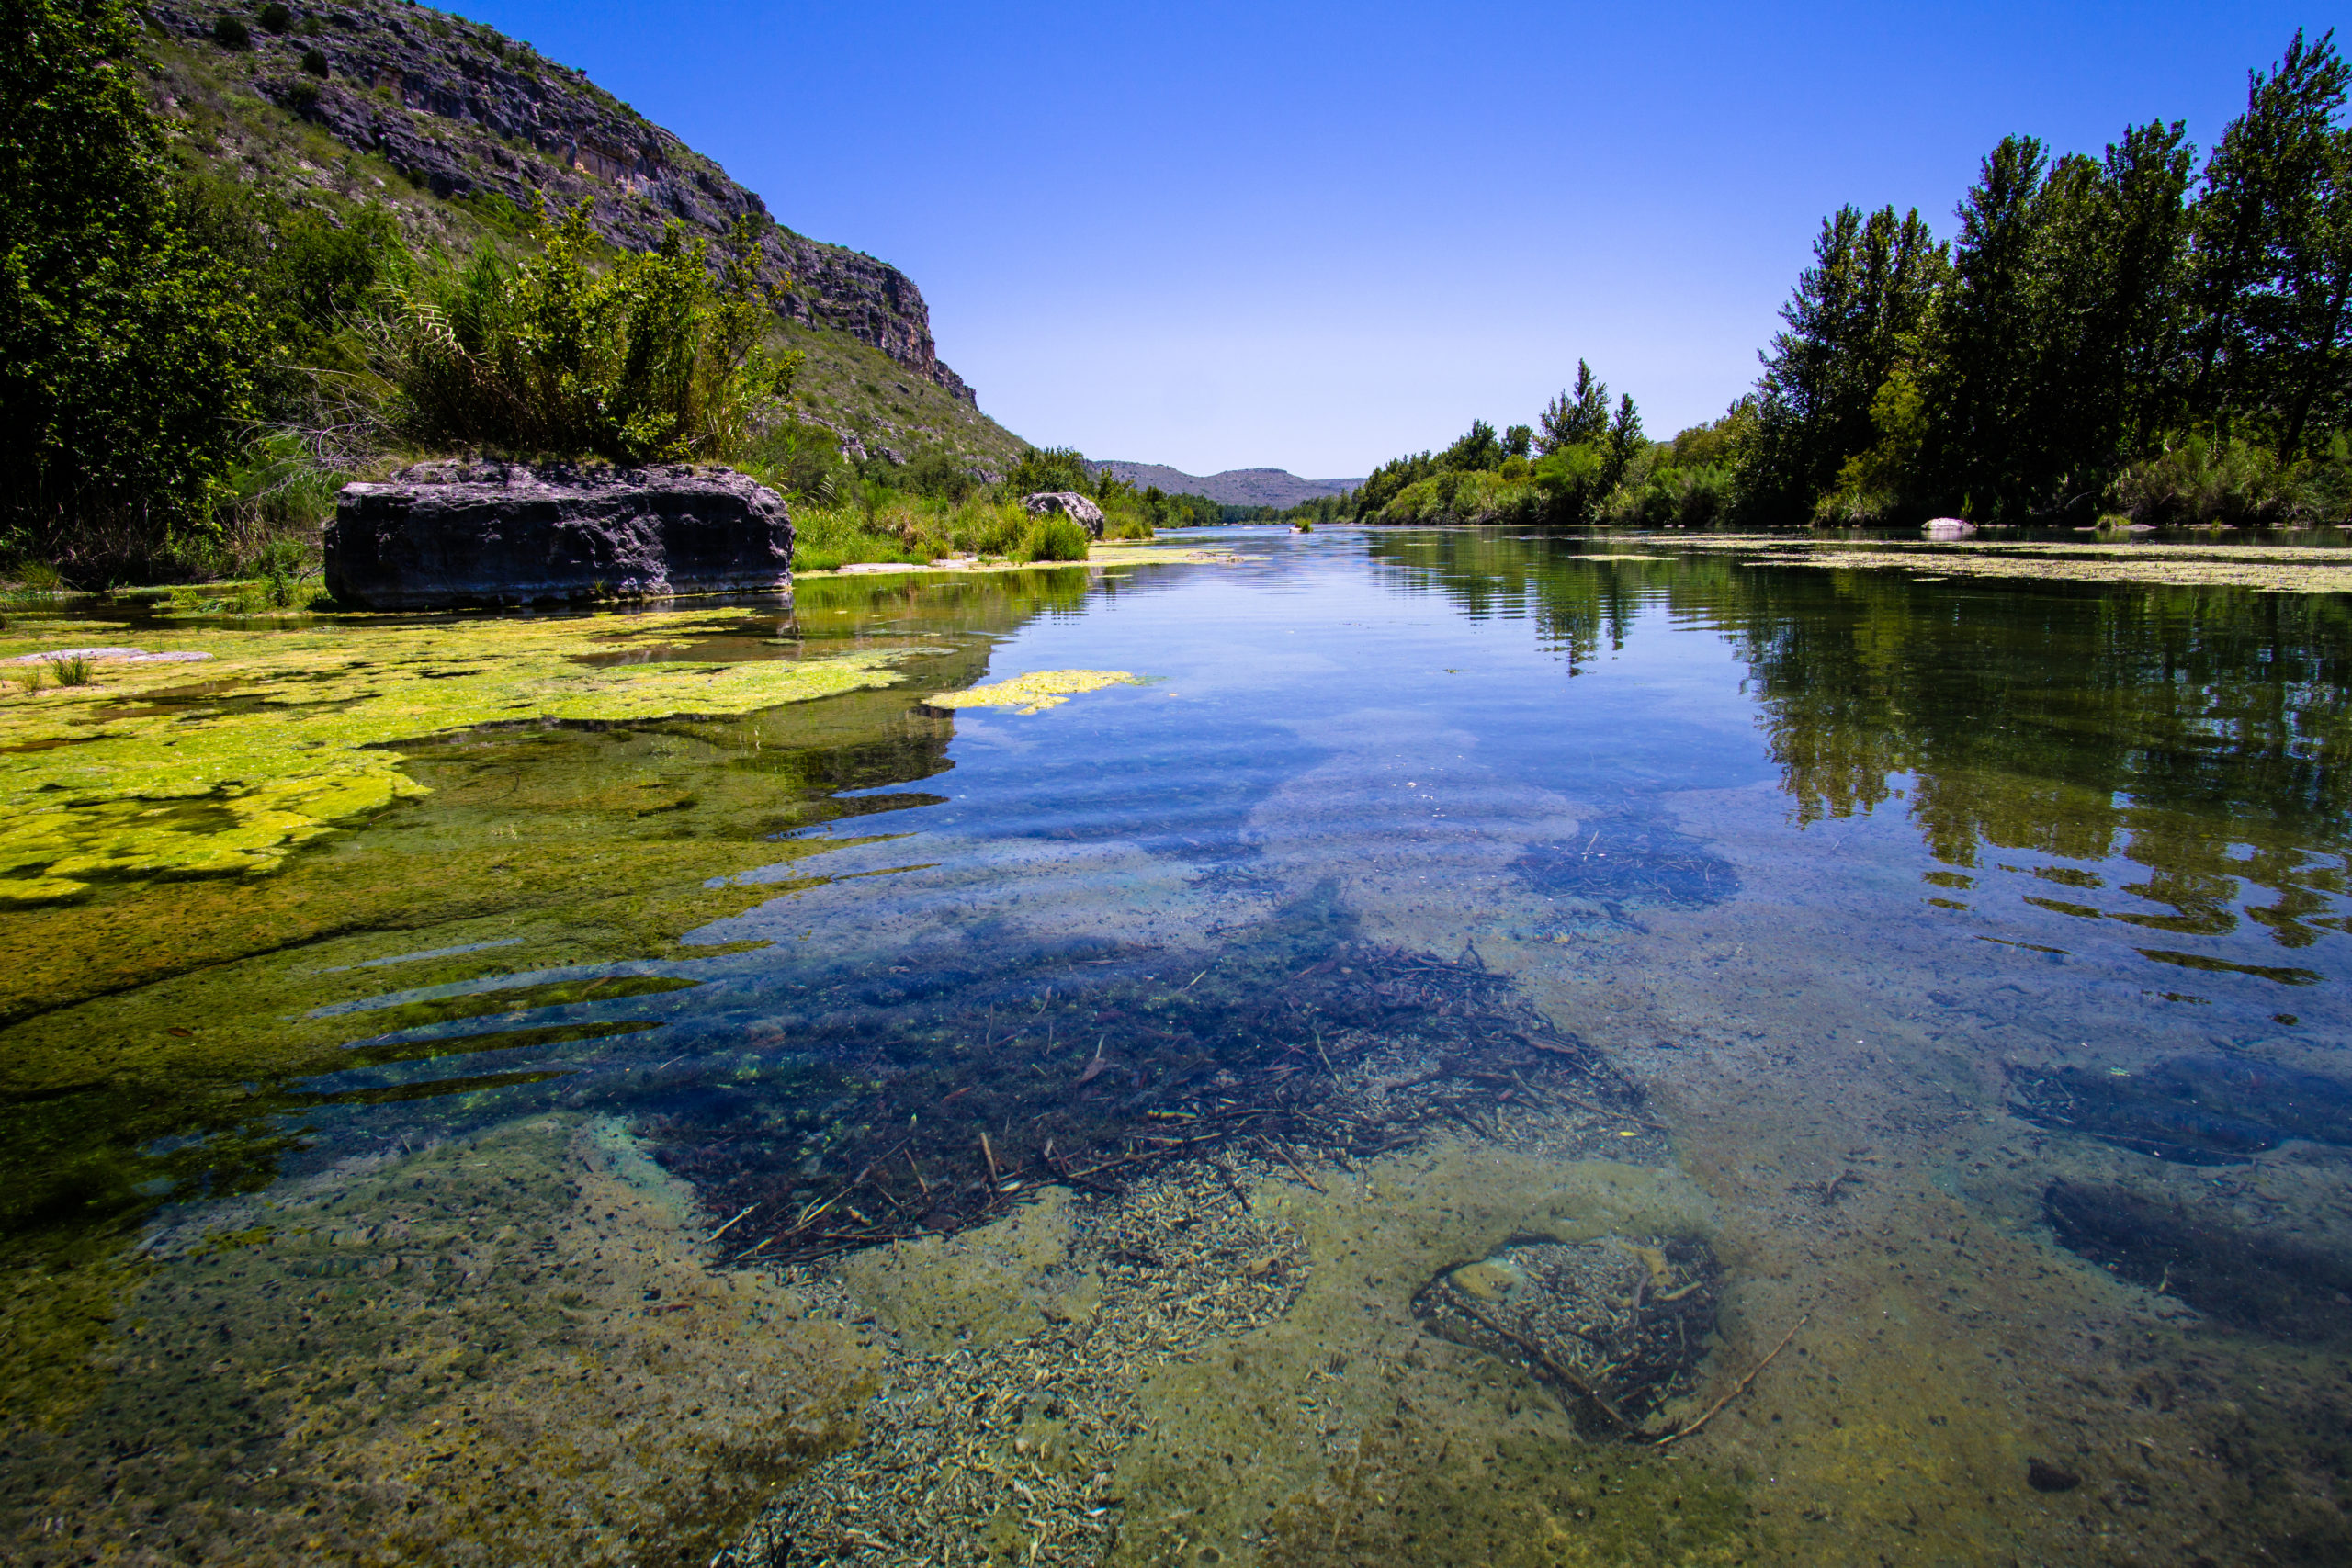 Devils River State Natural Area